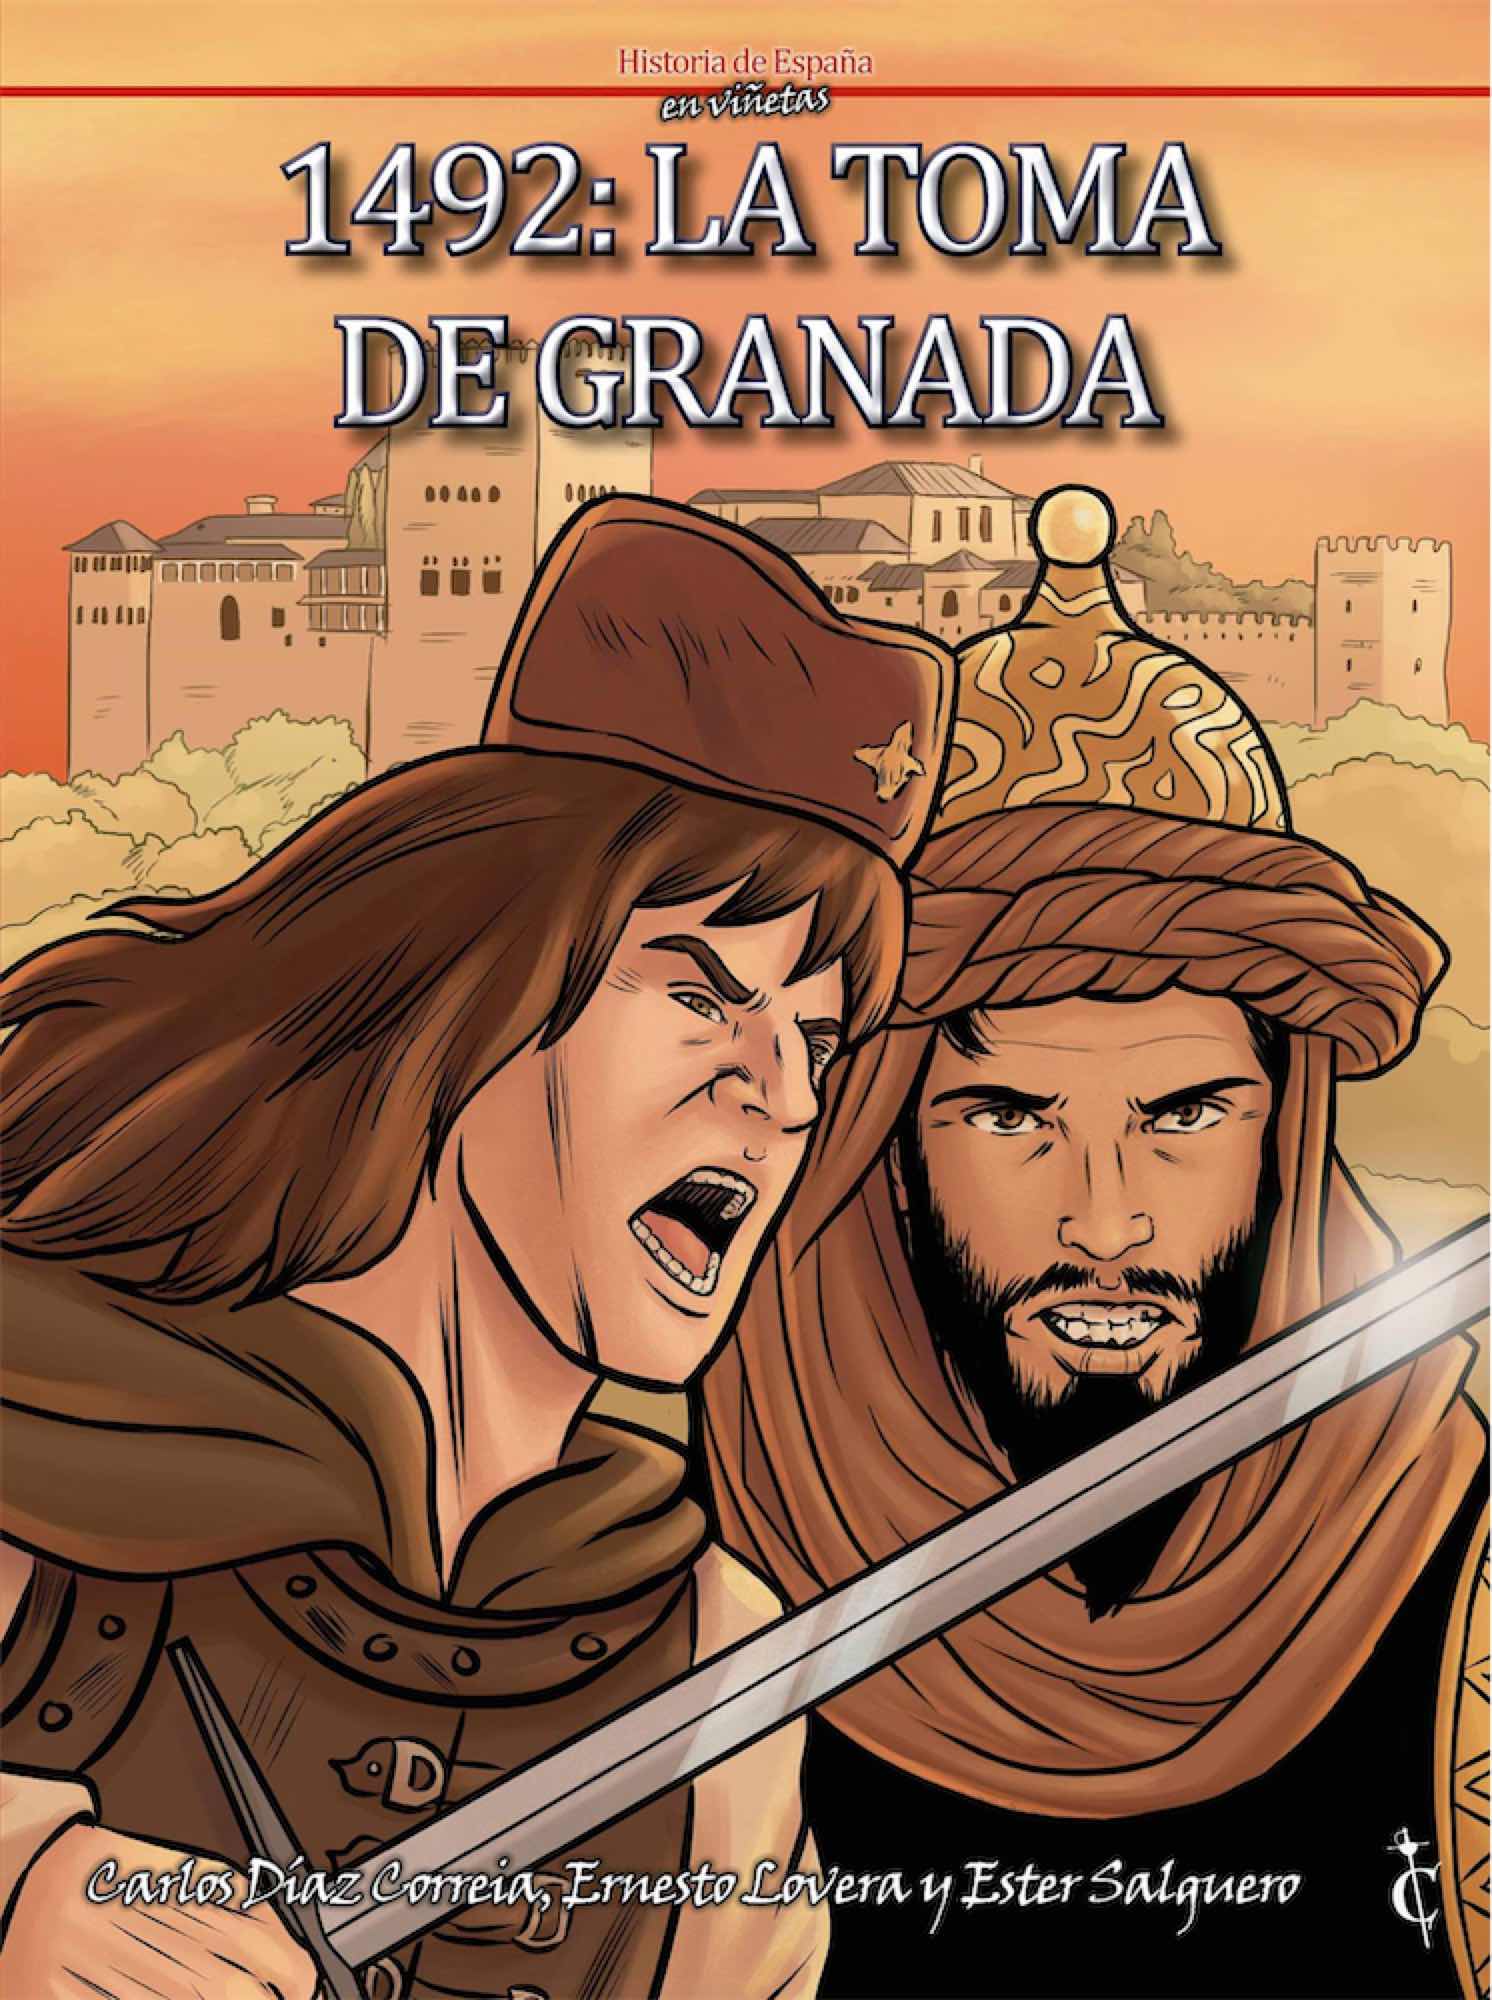 1492: LA TOMA DE GRANADA